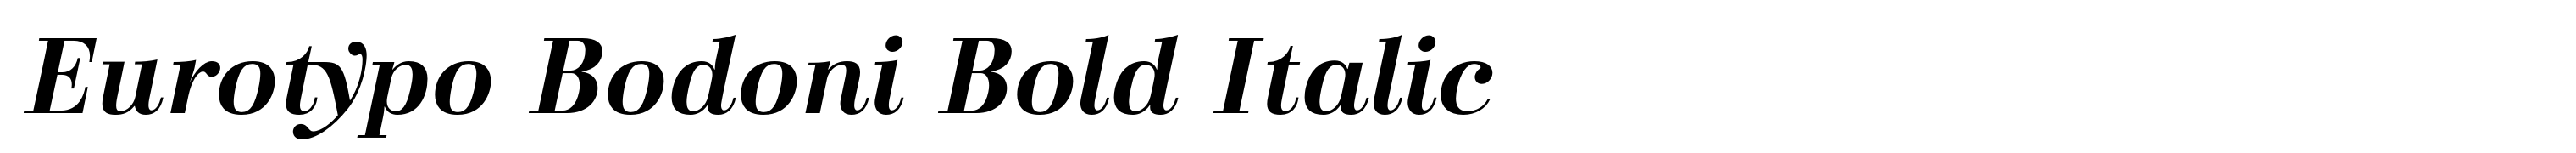 Eurotypo Bodoni Bold Italic